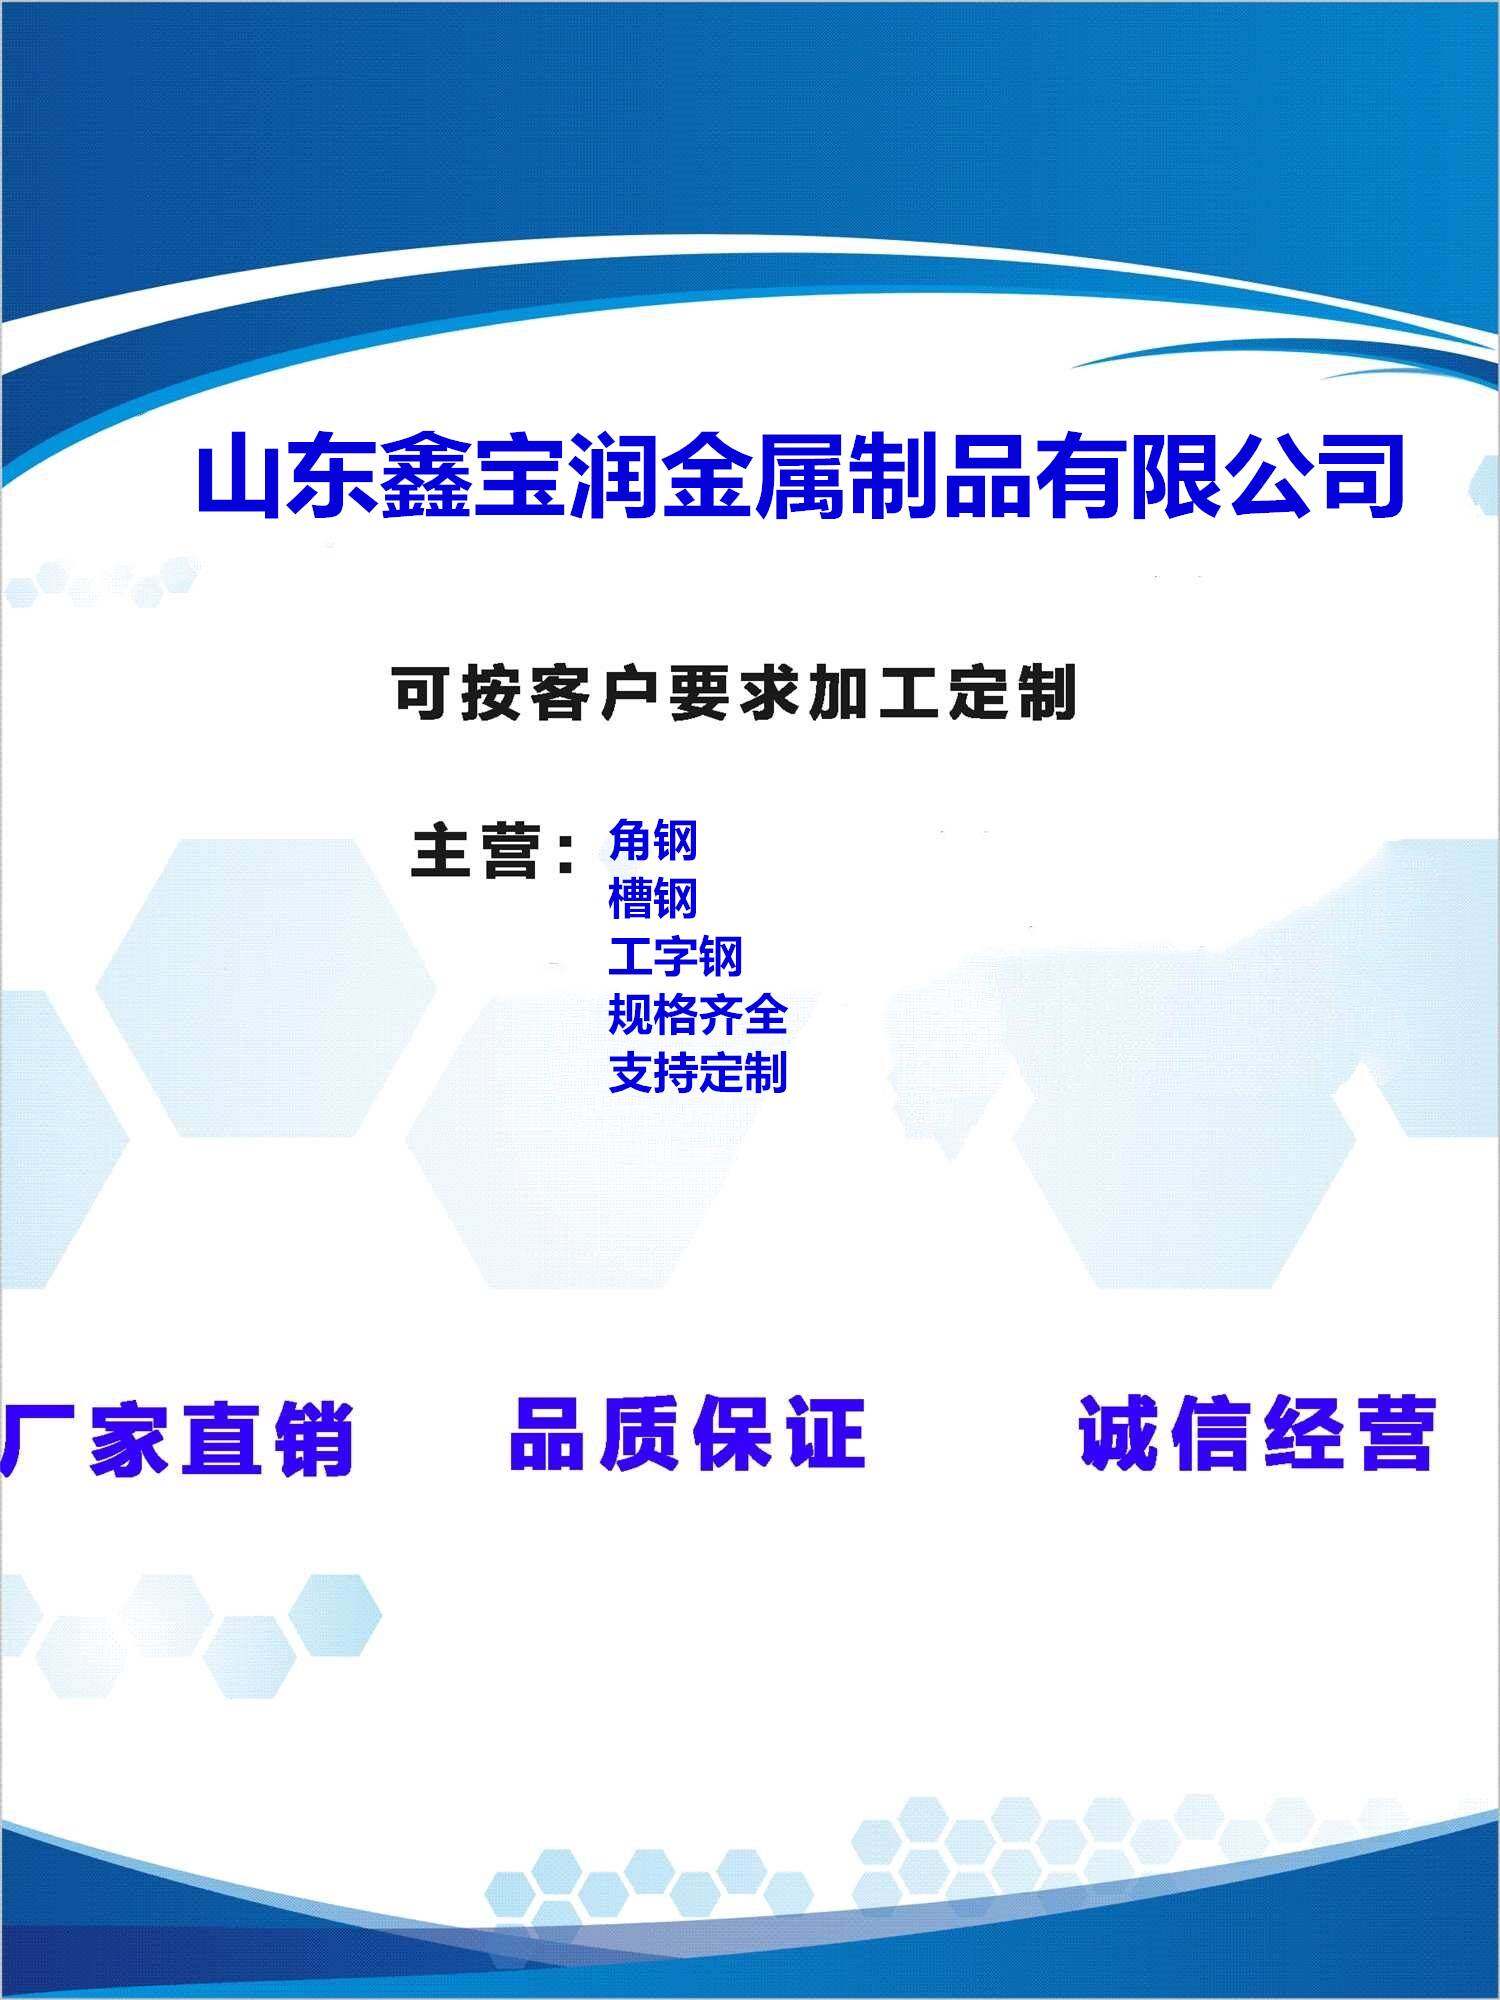 Shandong Xinbaorun Metal Products Co., LTD